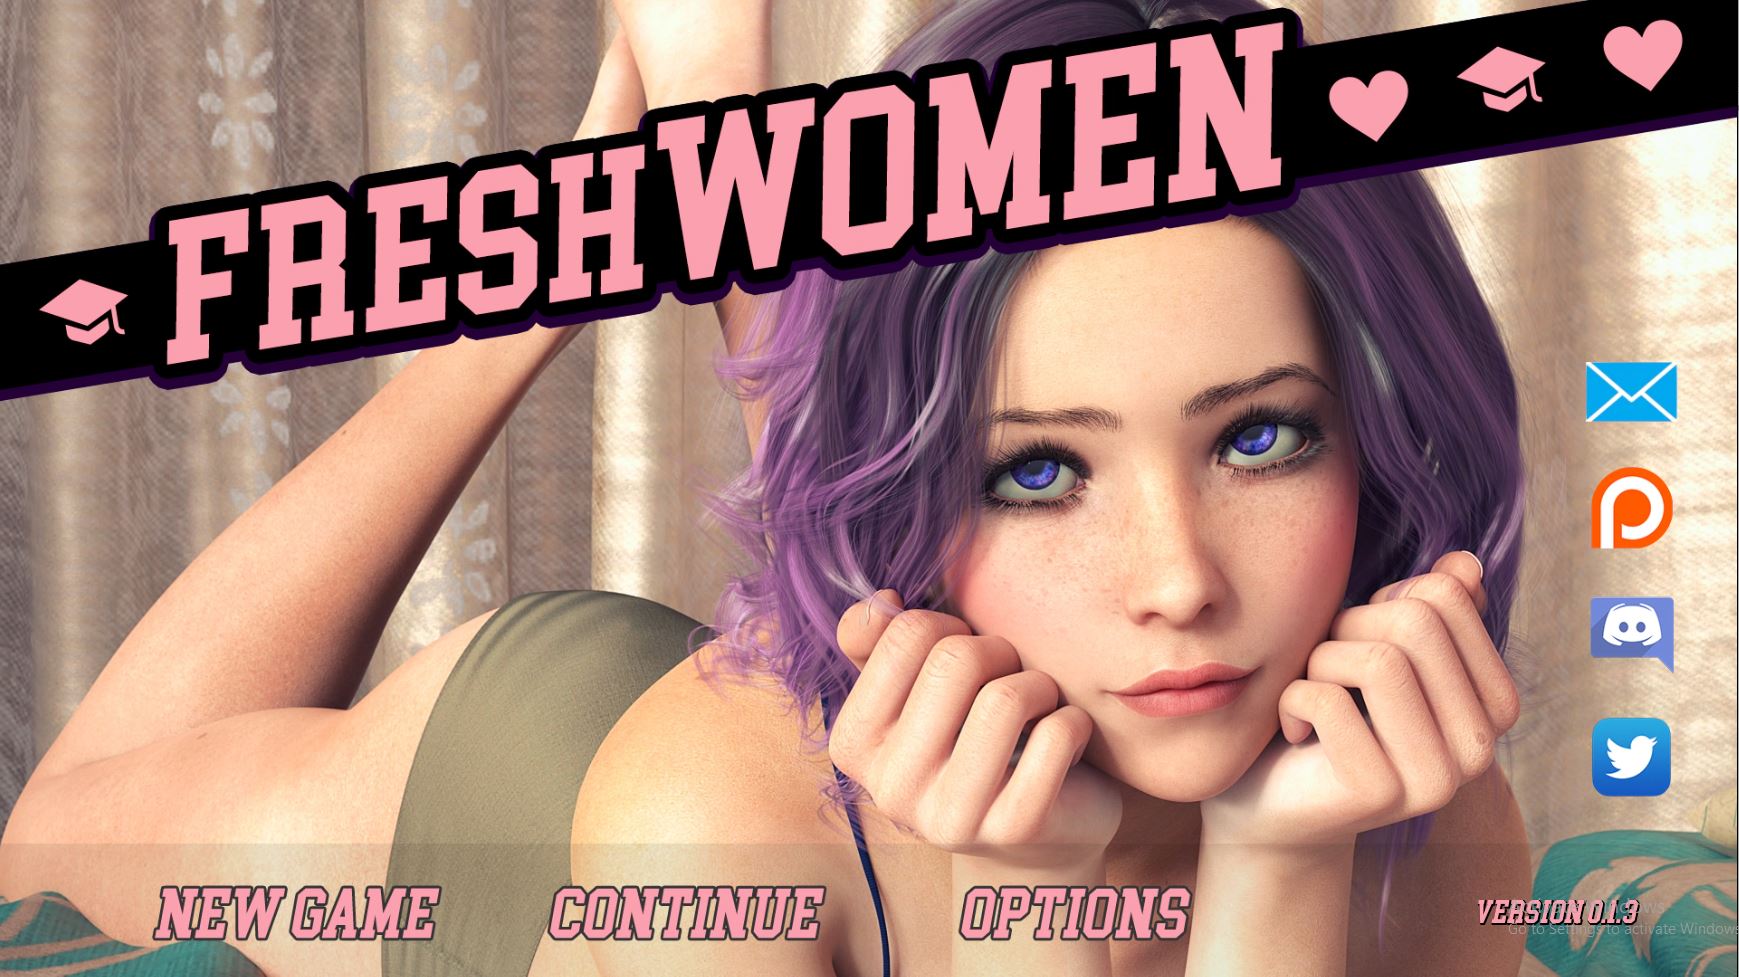 Adultgamesworld Free Porn Games and Sex Games » FreshWomen – New Season 2 image